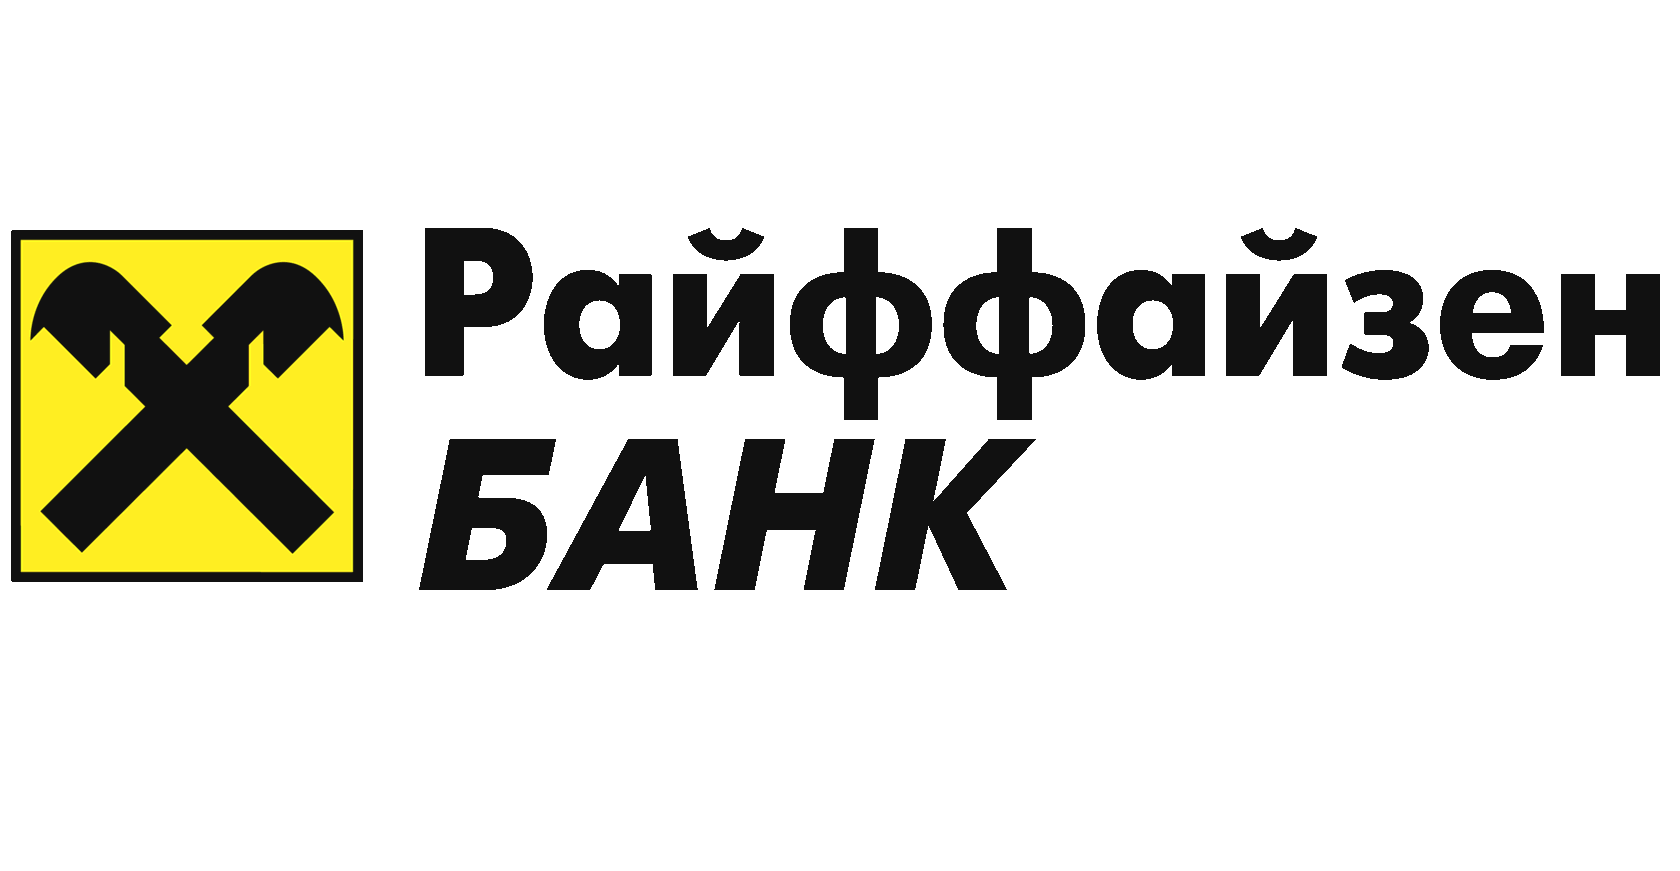 Райффайзен Банк